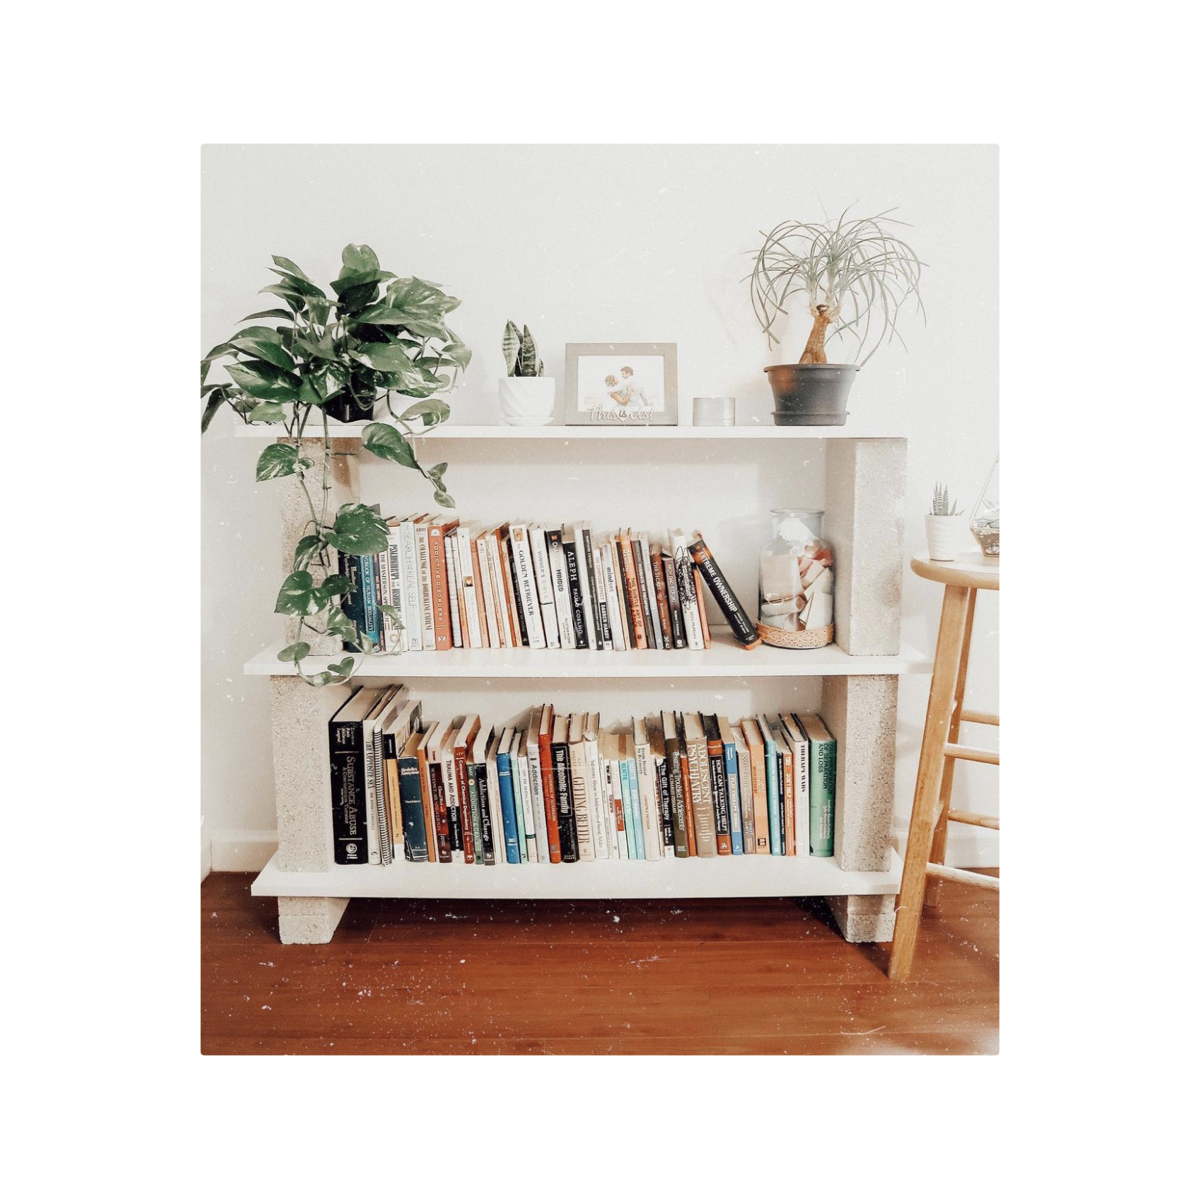 25 Best Diy Bookshelf Ideas 2021 Easy, Long Horizontal Bookcase With Doors